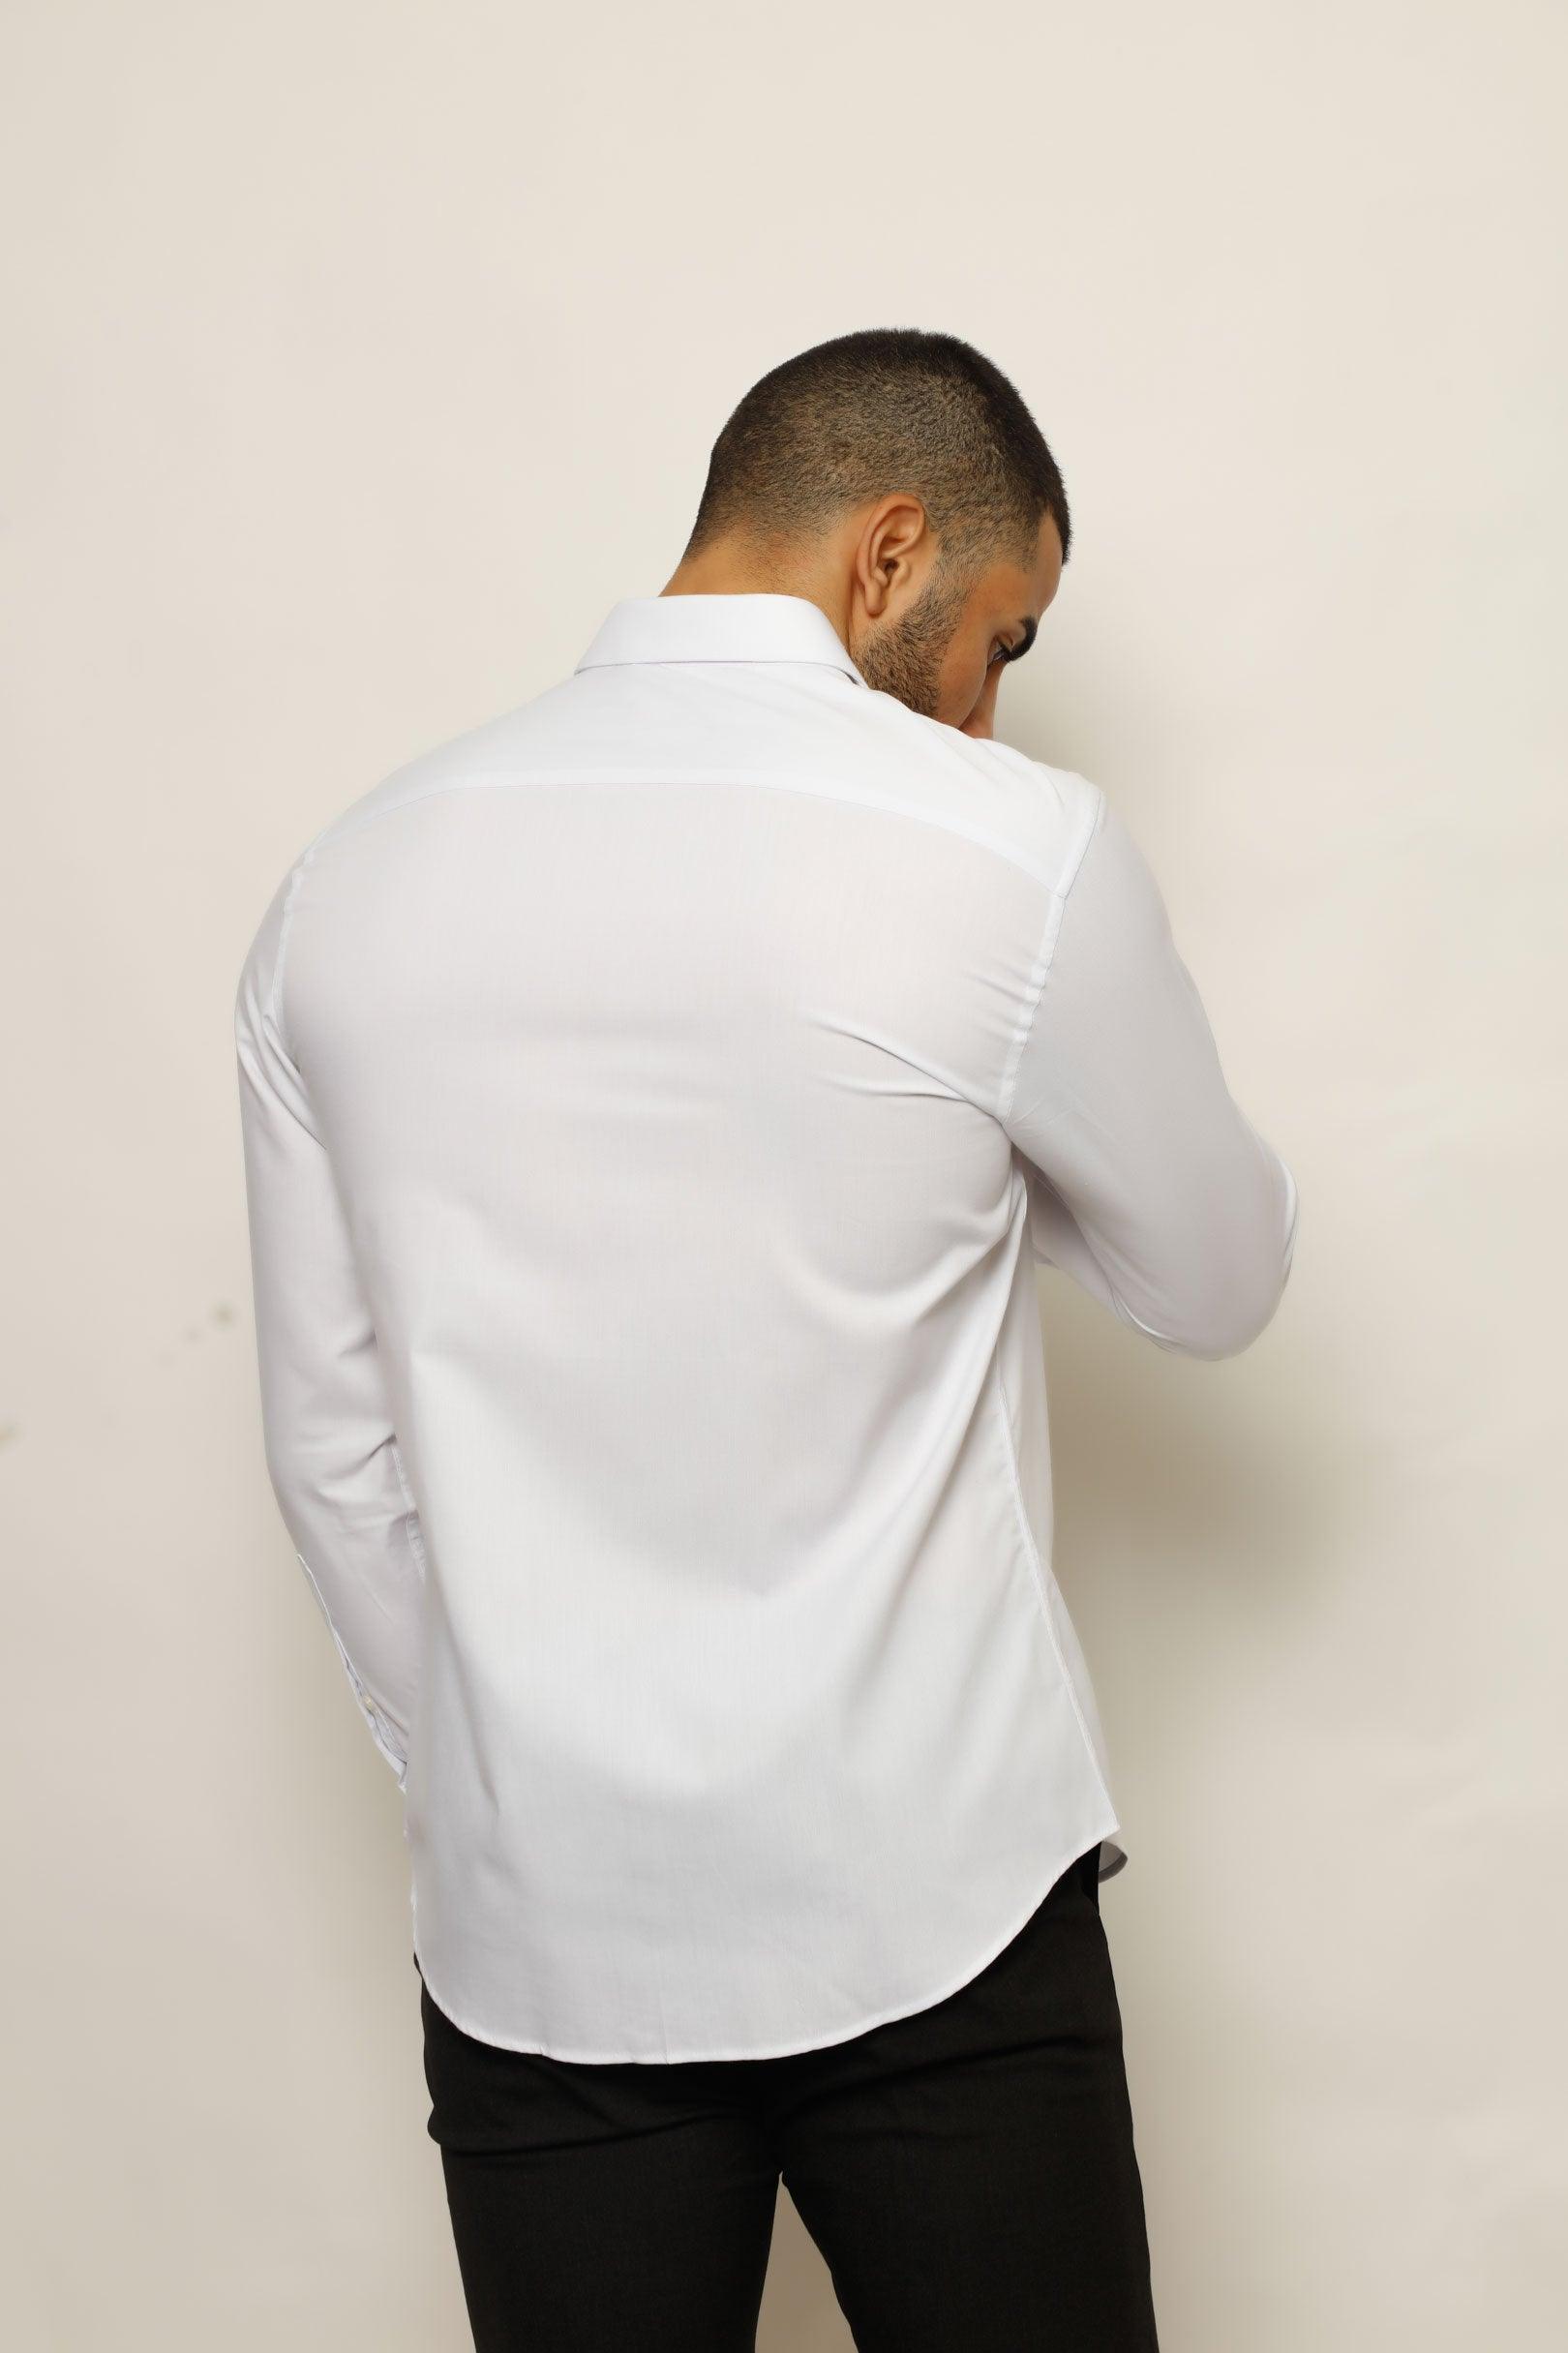 PERFINO URBAN CULTURE FORMALS, SHIRT, CORADO, longsleeve, men, shirt, top, white, coradomoda, coradomoda.com